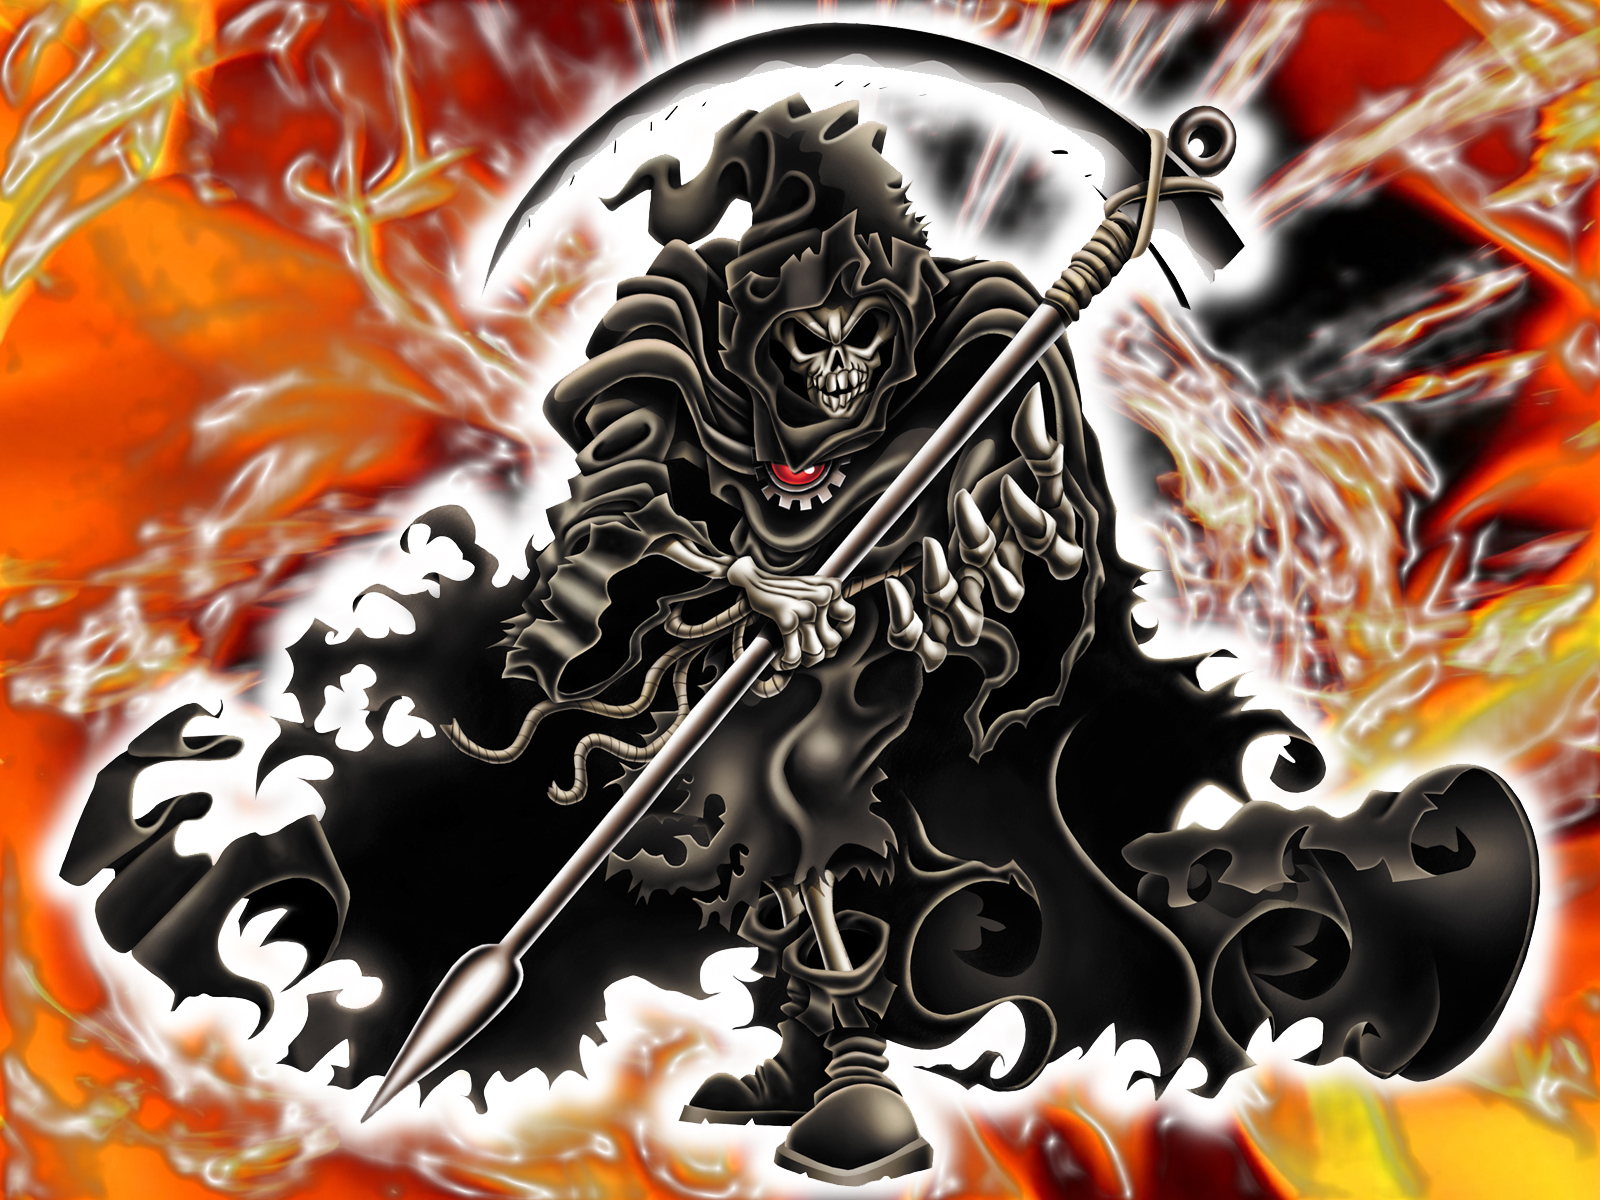 grim reaper live wallpapers,cg artwork,fictional character,illustration,demon,graphic design